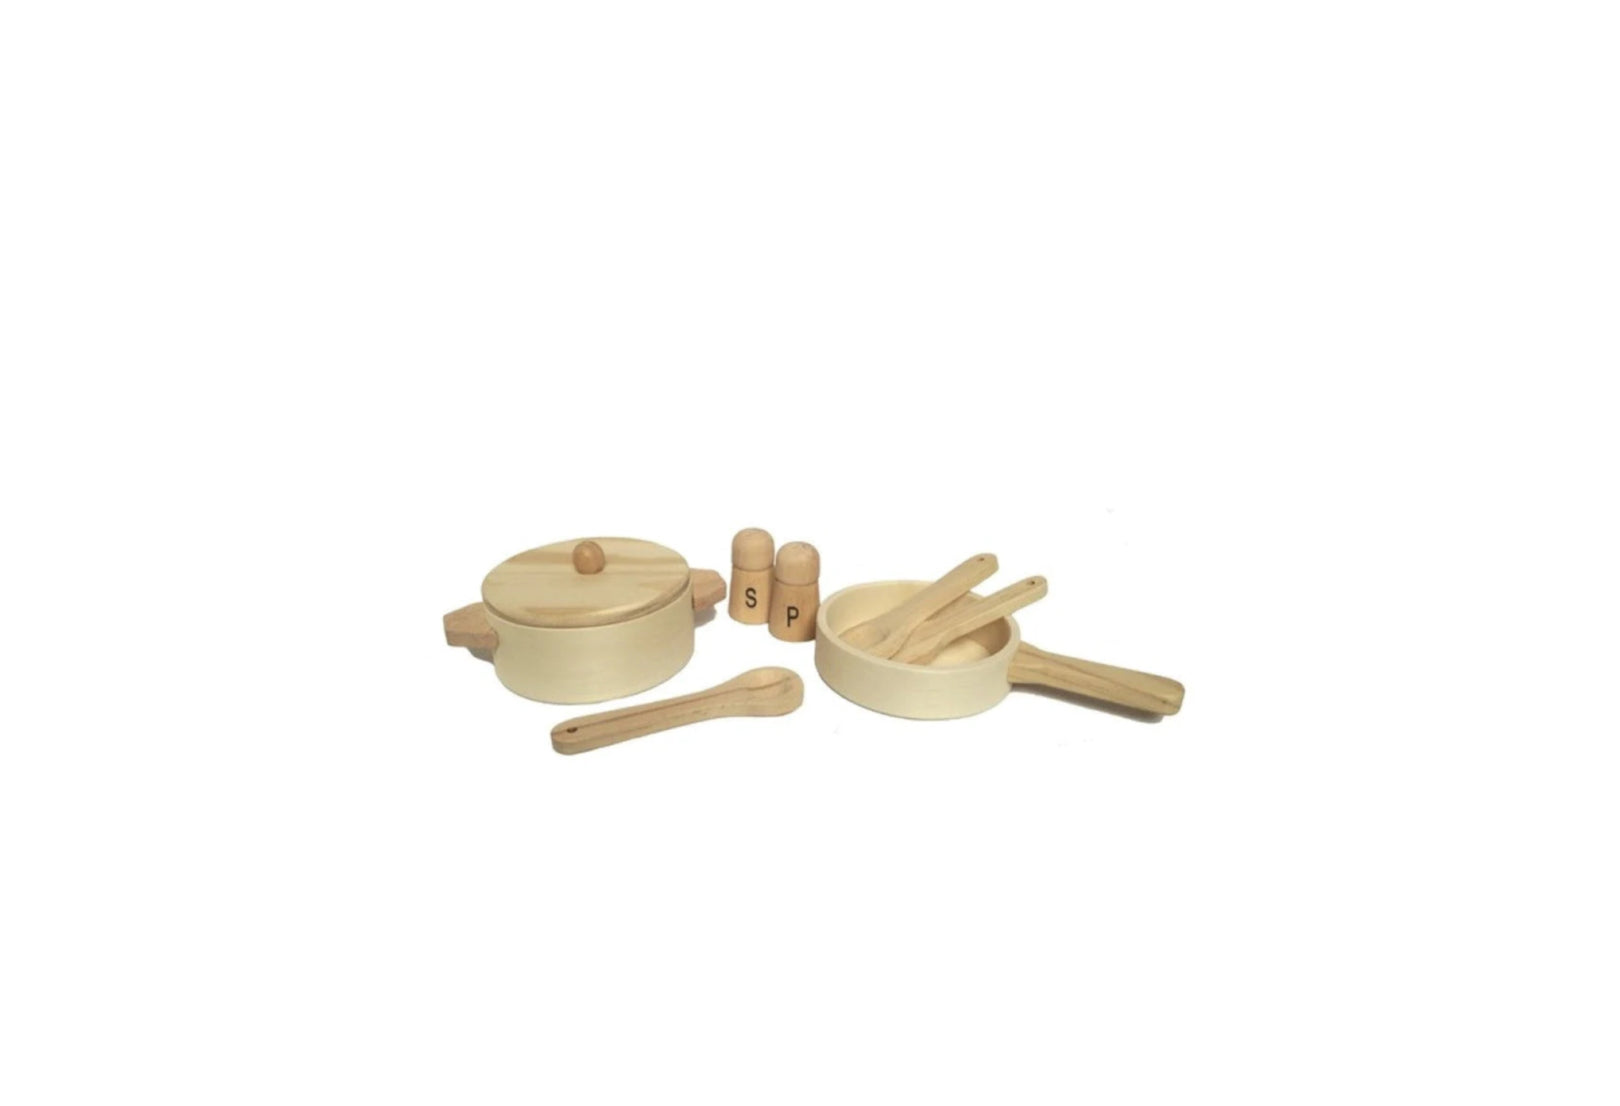 Egmont Toys Wooden Pan Set Toy Natural